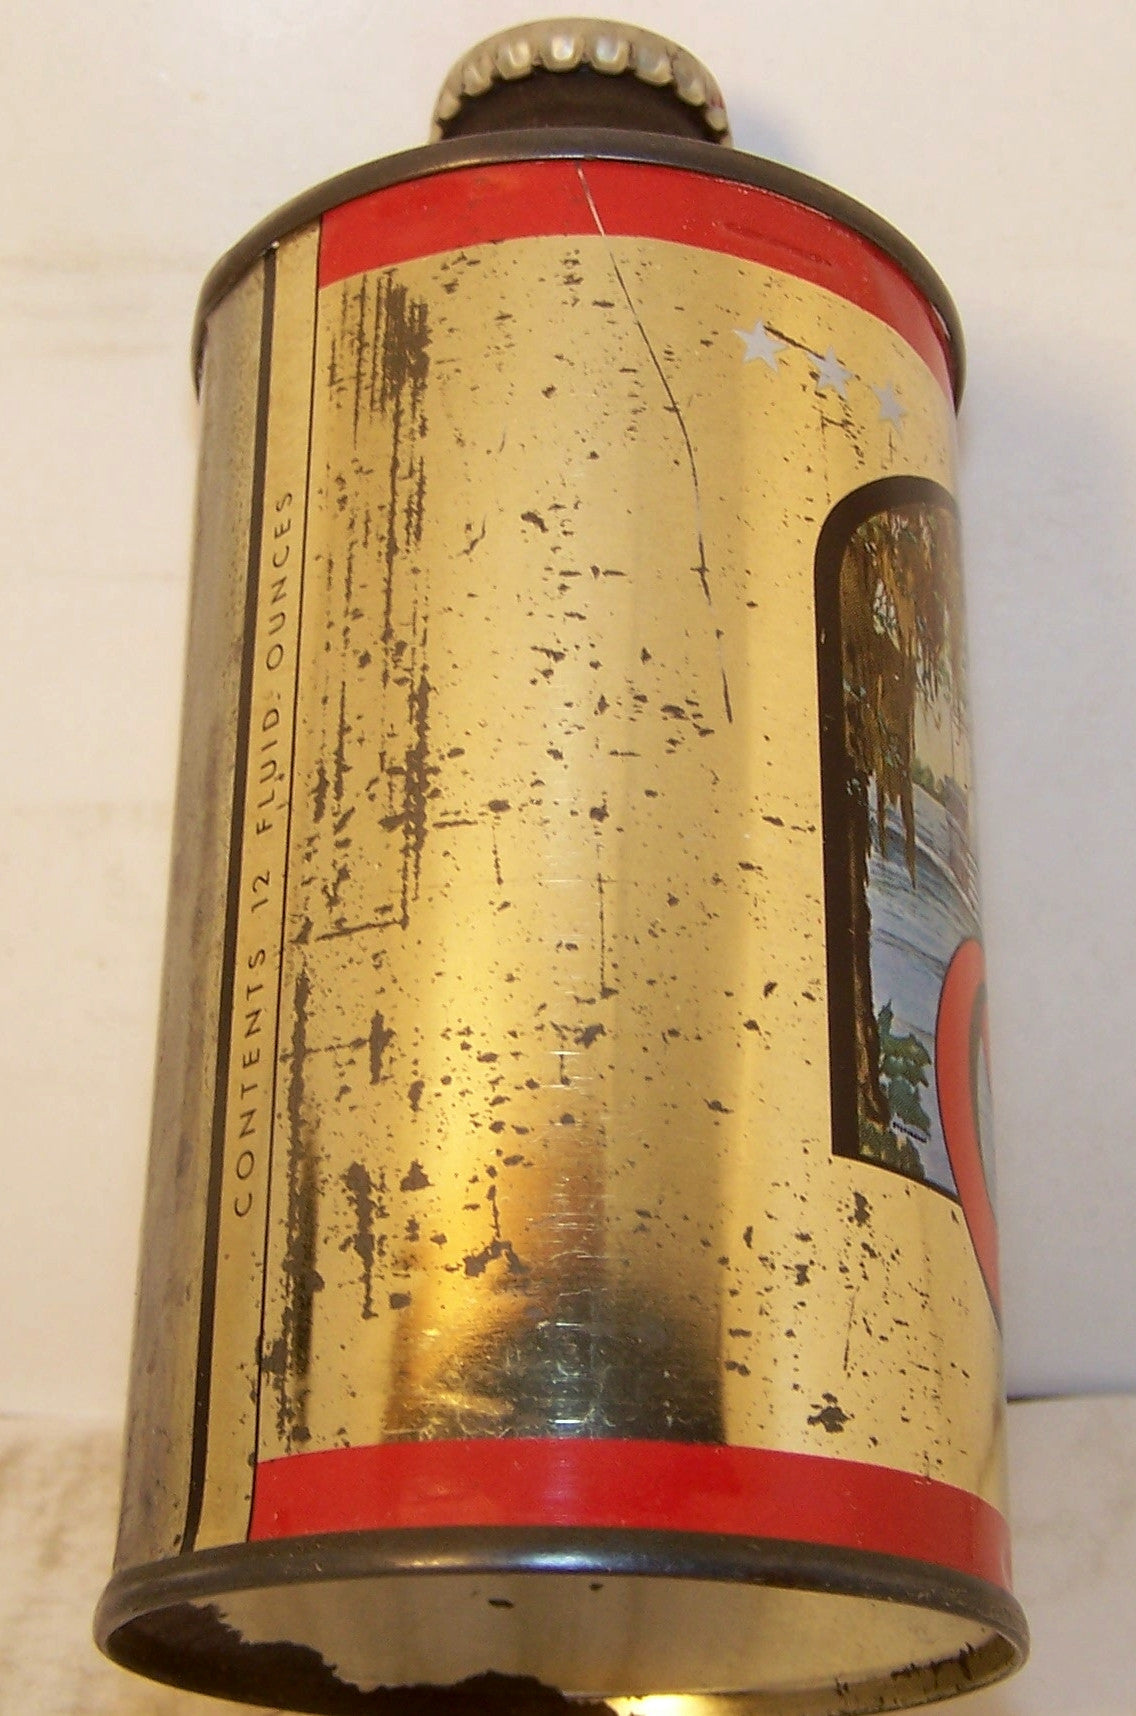 Cook's Goldblume Beer Robert E Lee, USBC 158-7, Grade 1/1- Sold 11/28/15